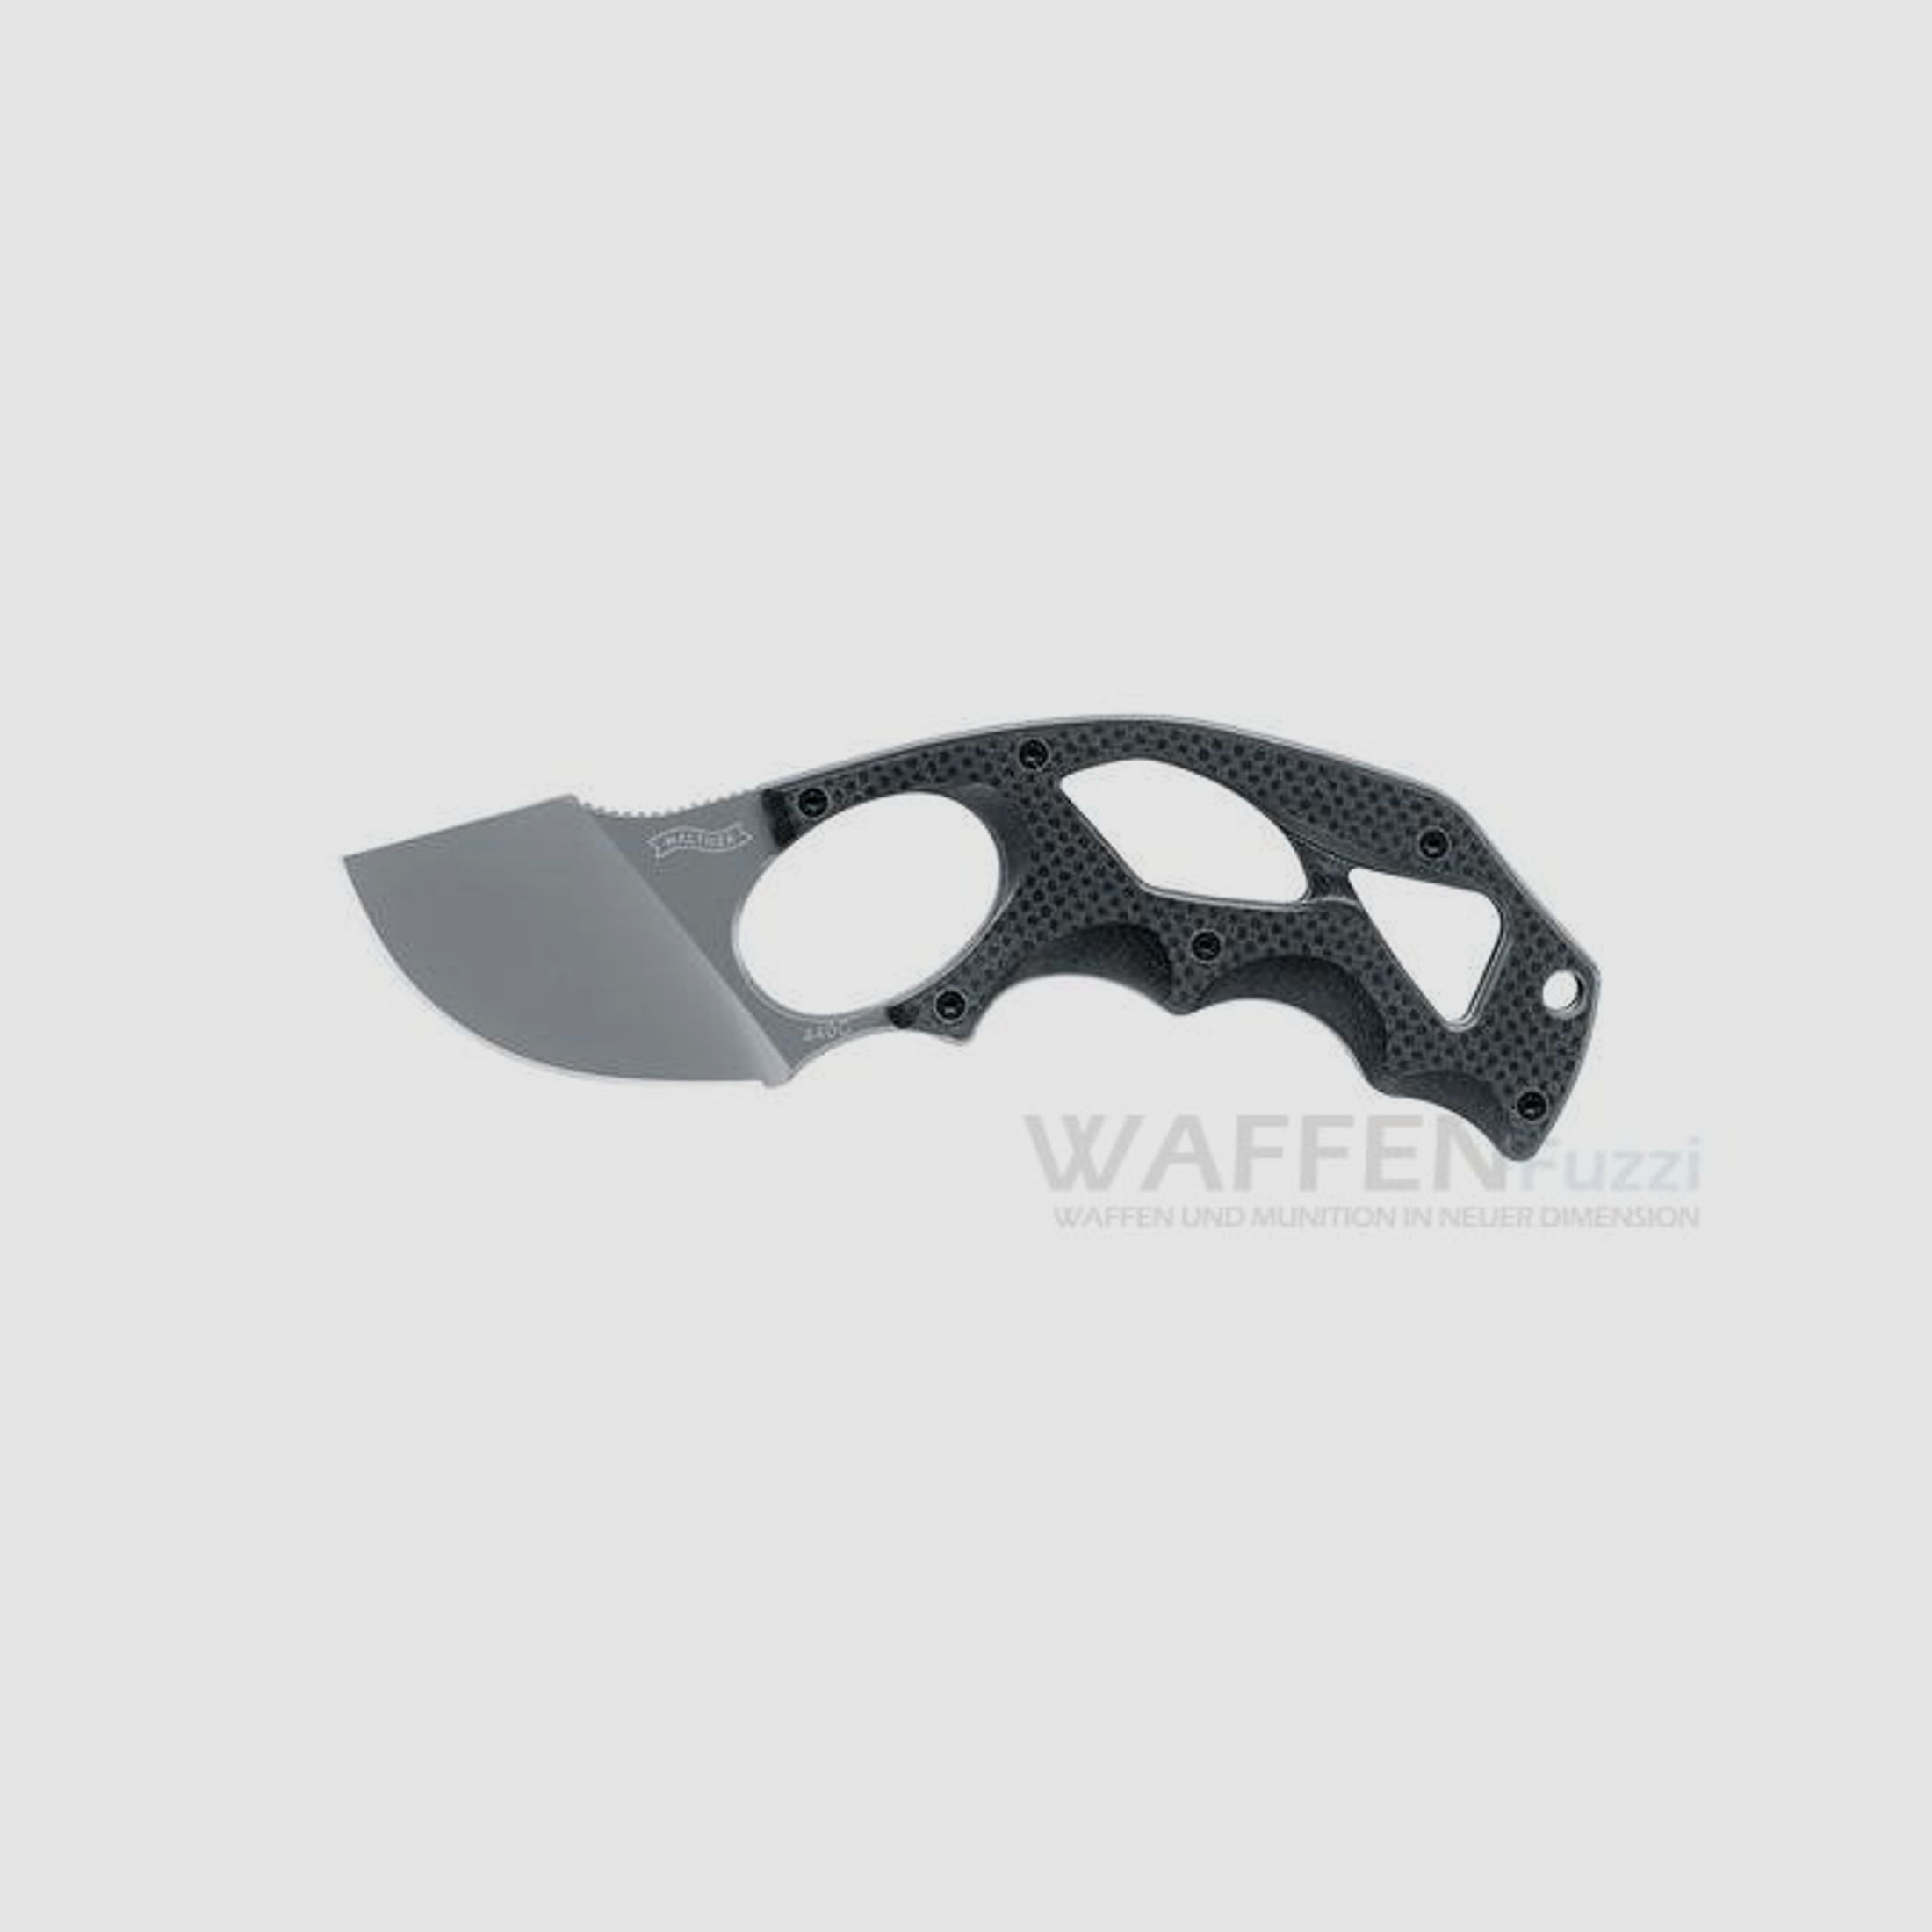 Walther TSK - Tactical Skinner Knife 440C / G10